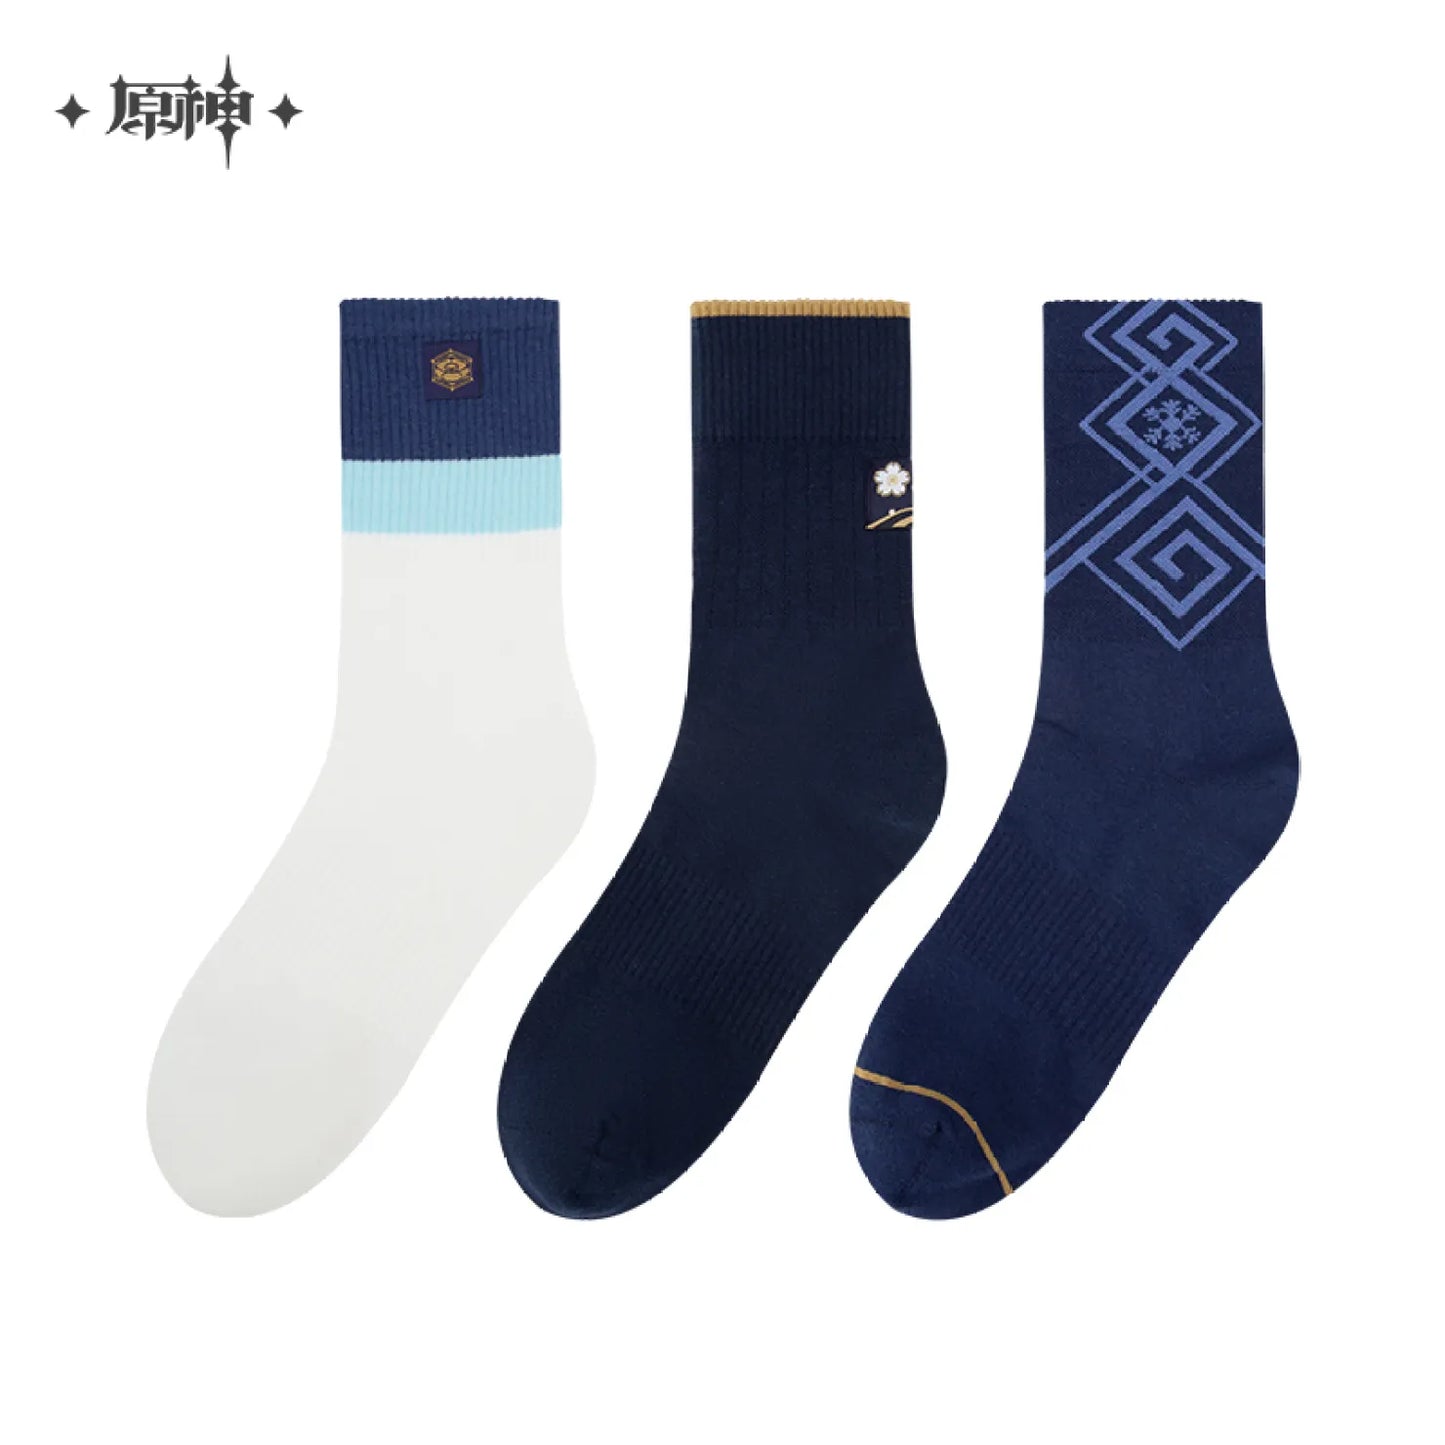 [OFFICIAL MERCHANDISE] Ayaka Theme Impression Socks 3 Styles